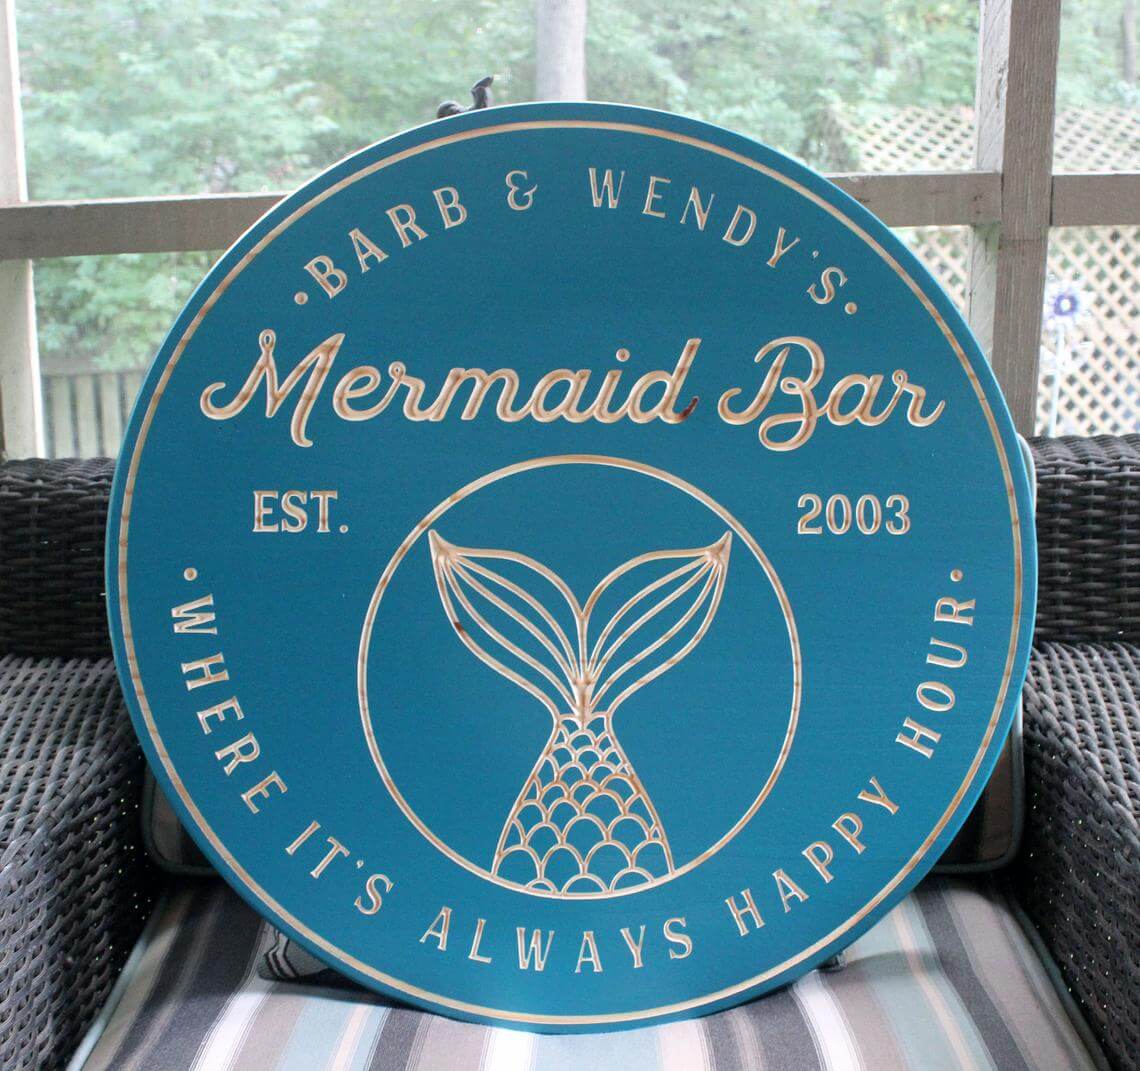 The Mermaid bar Happy Hour